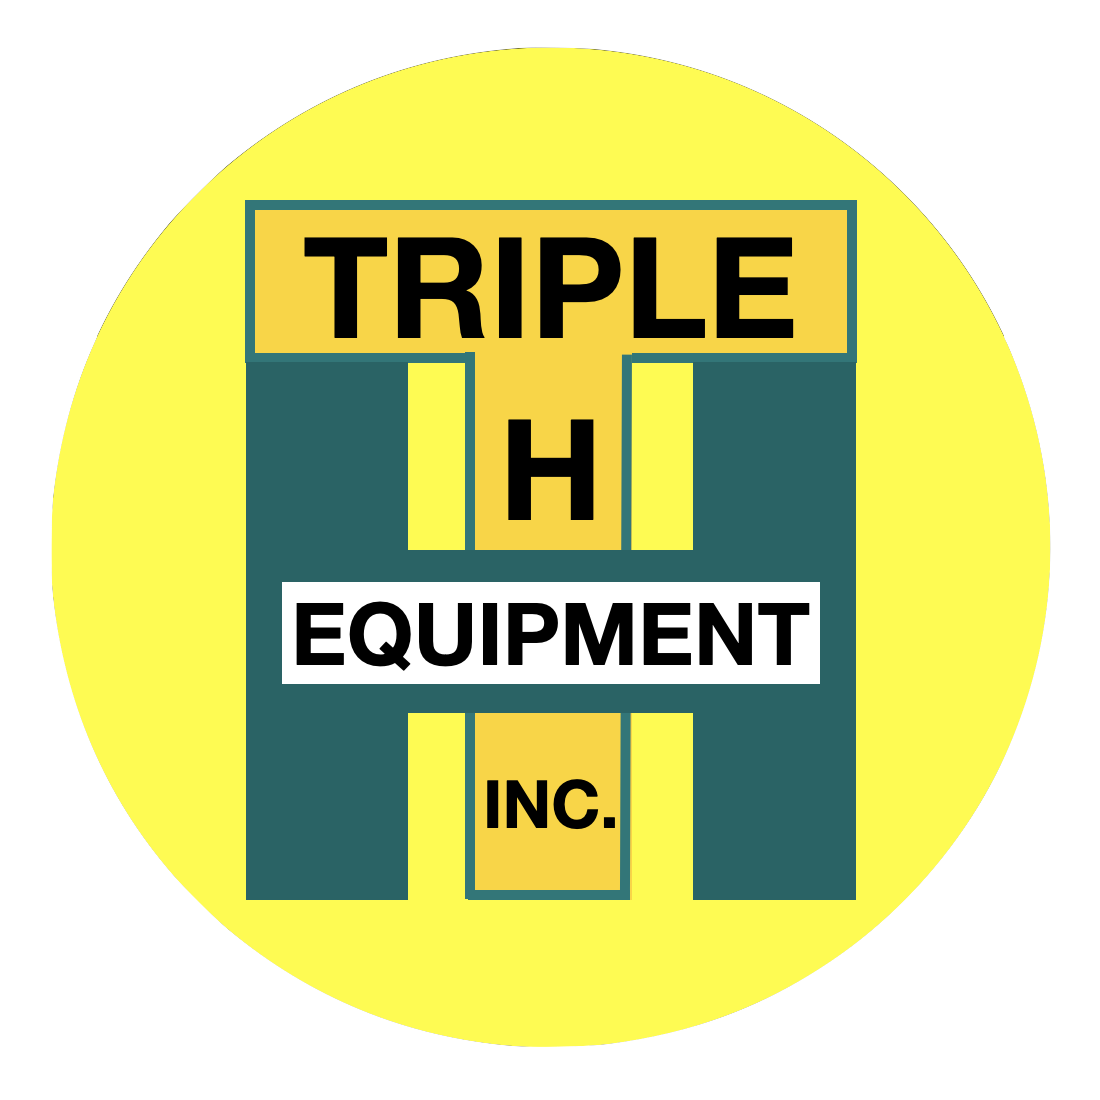 Triple H Equipment